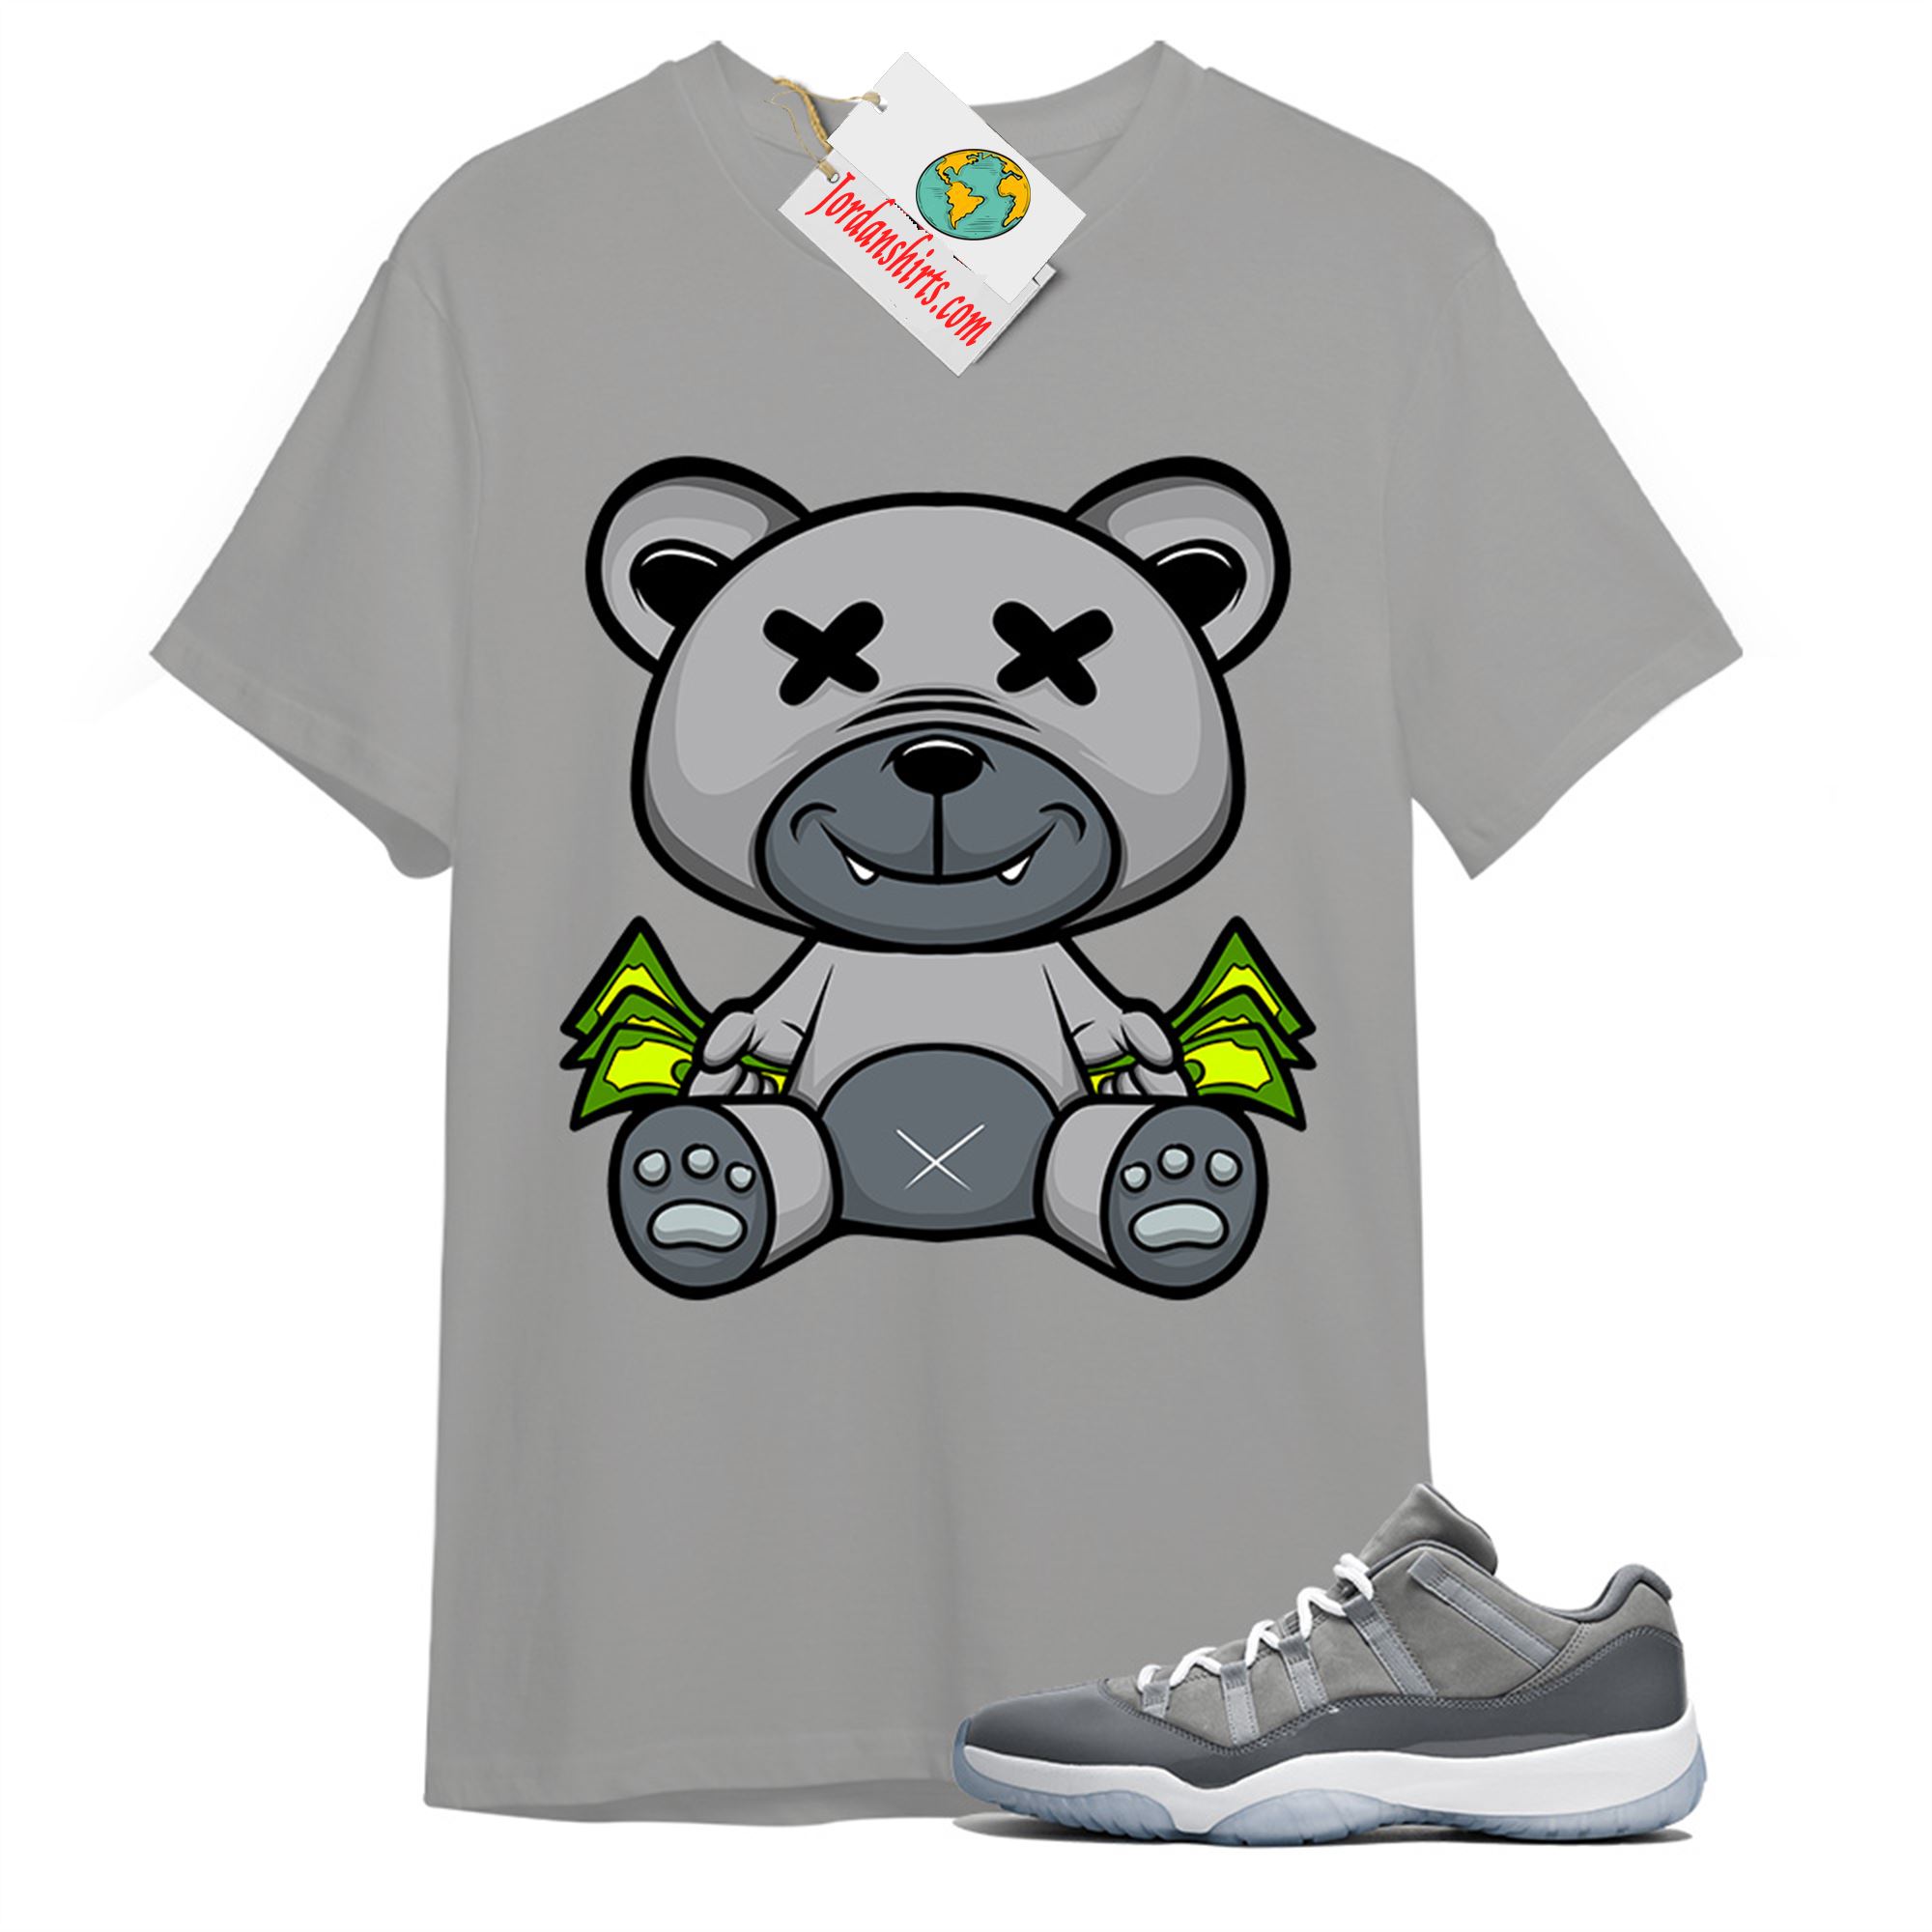 Jordan 11 Shirt, Rich Teddy Bear Grey T-shirt Air Jordan 11 Cool Grey 11s Size Up To 5xl